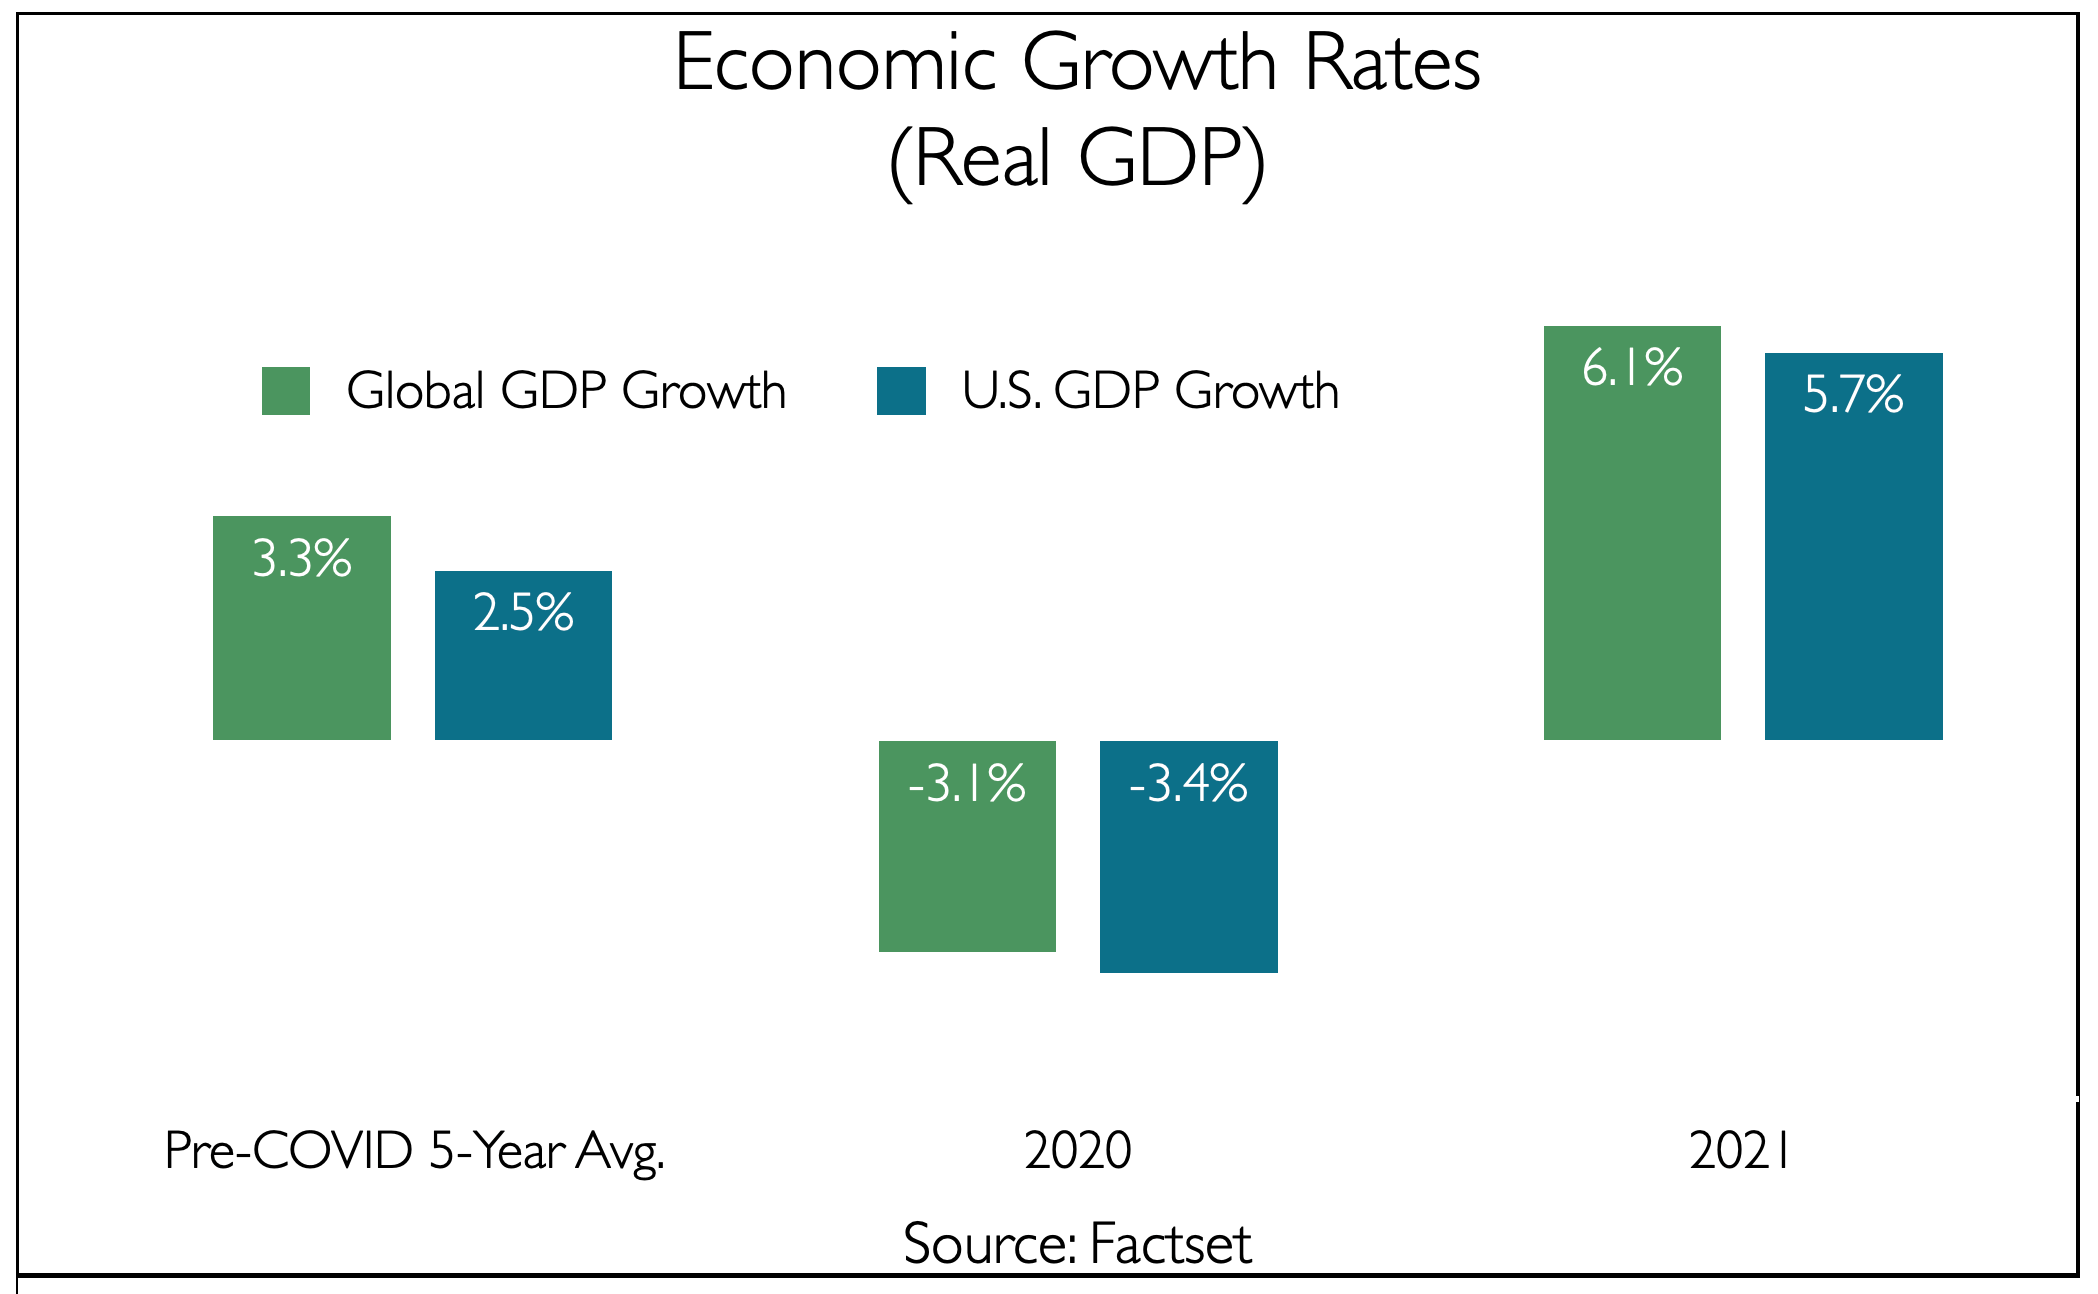 Chart 2 - Economic Growth Rates